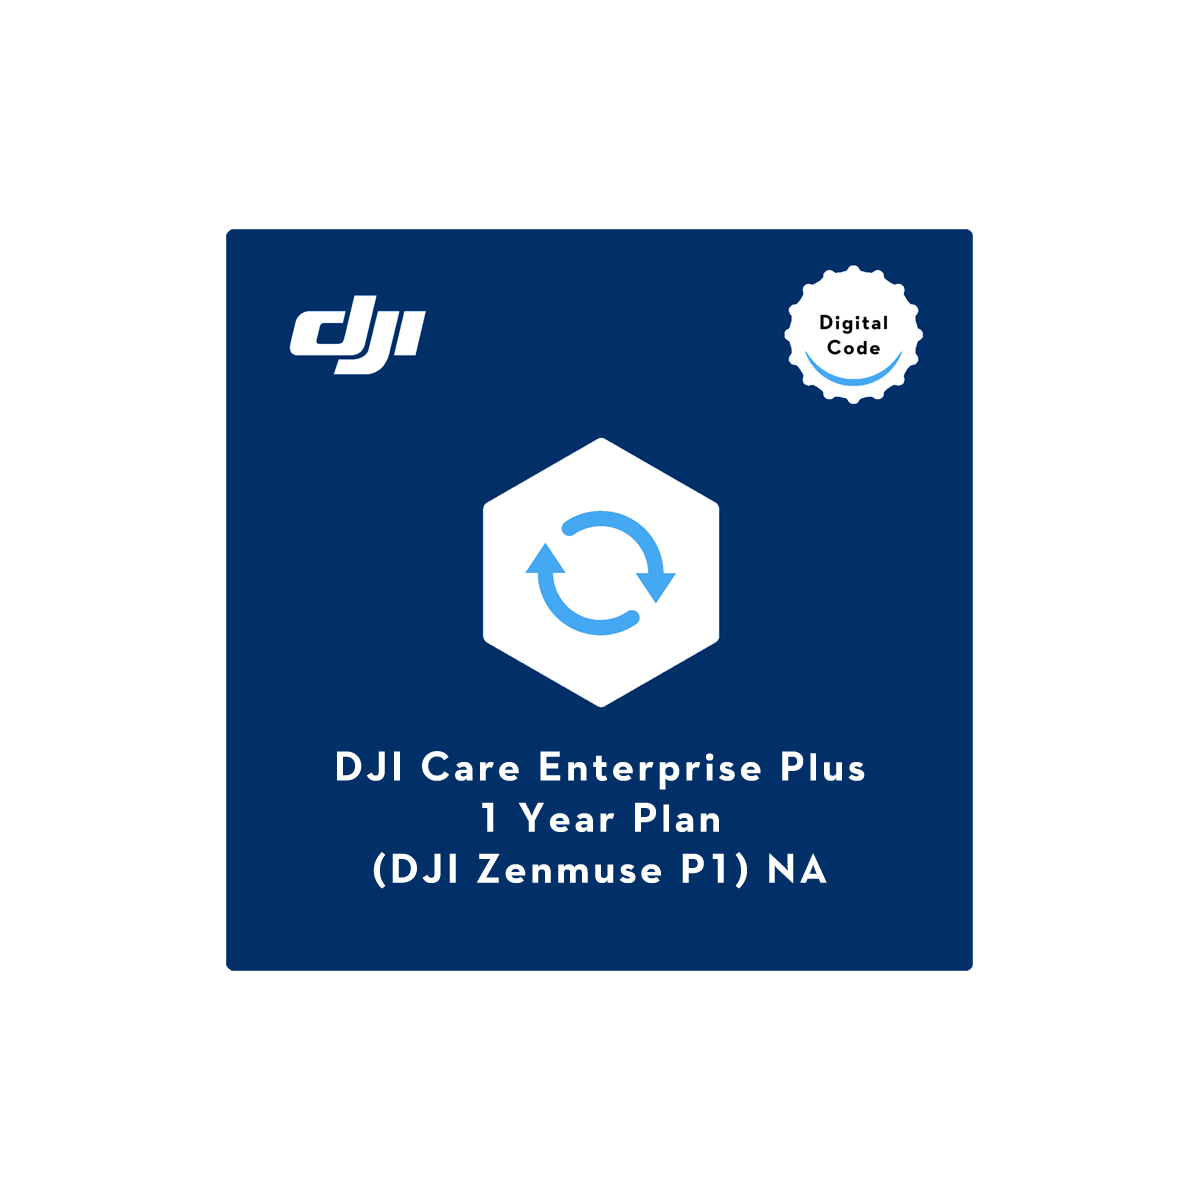 DJI Care Enterprise Plus (P1) NA